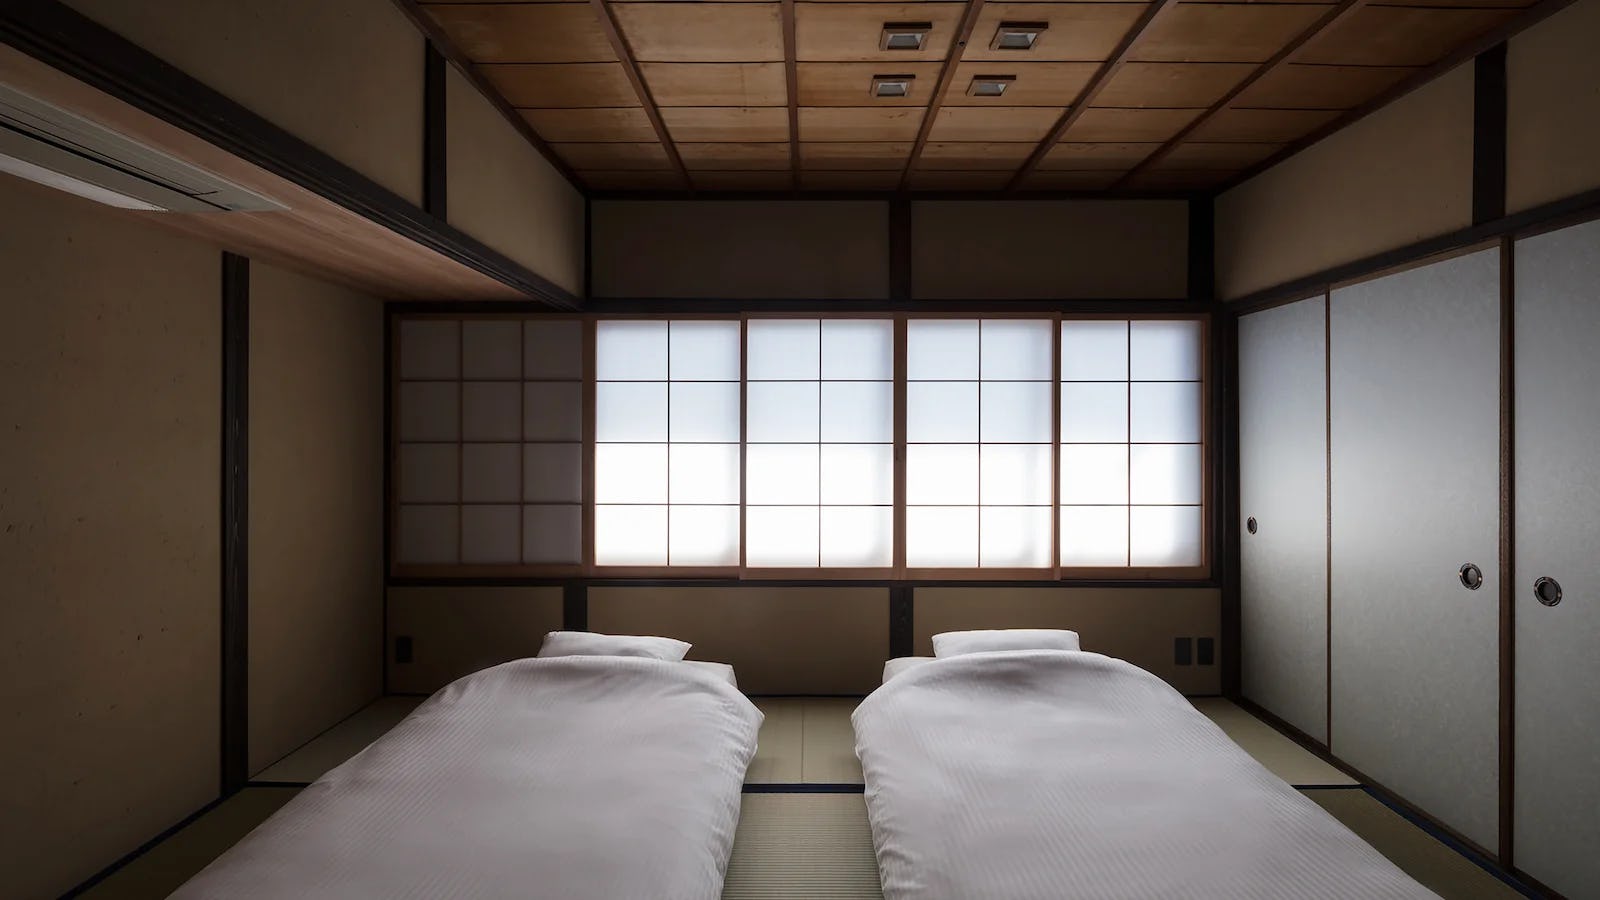 Maana Kyoto guest bedroom with futons